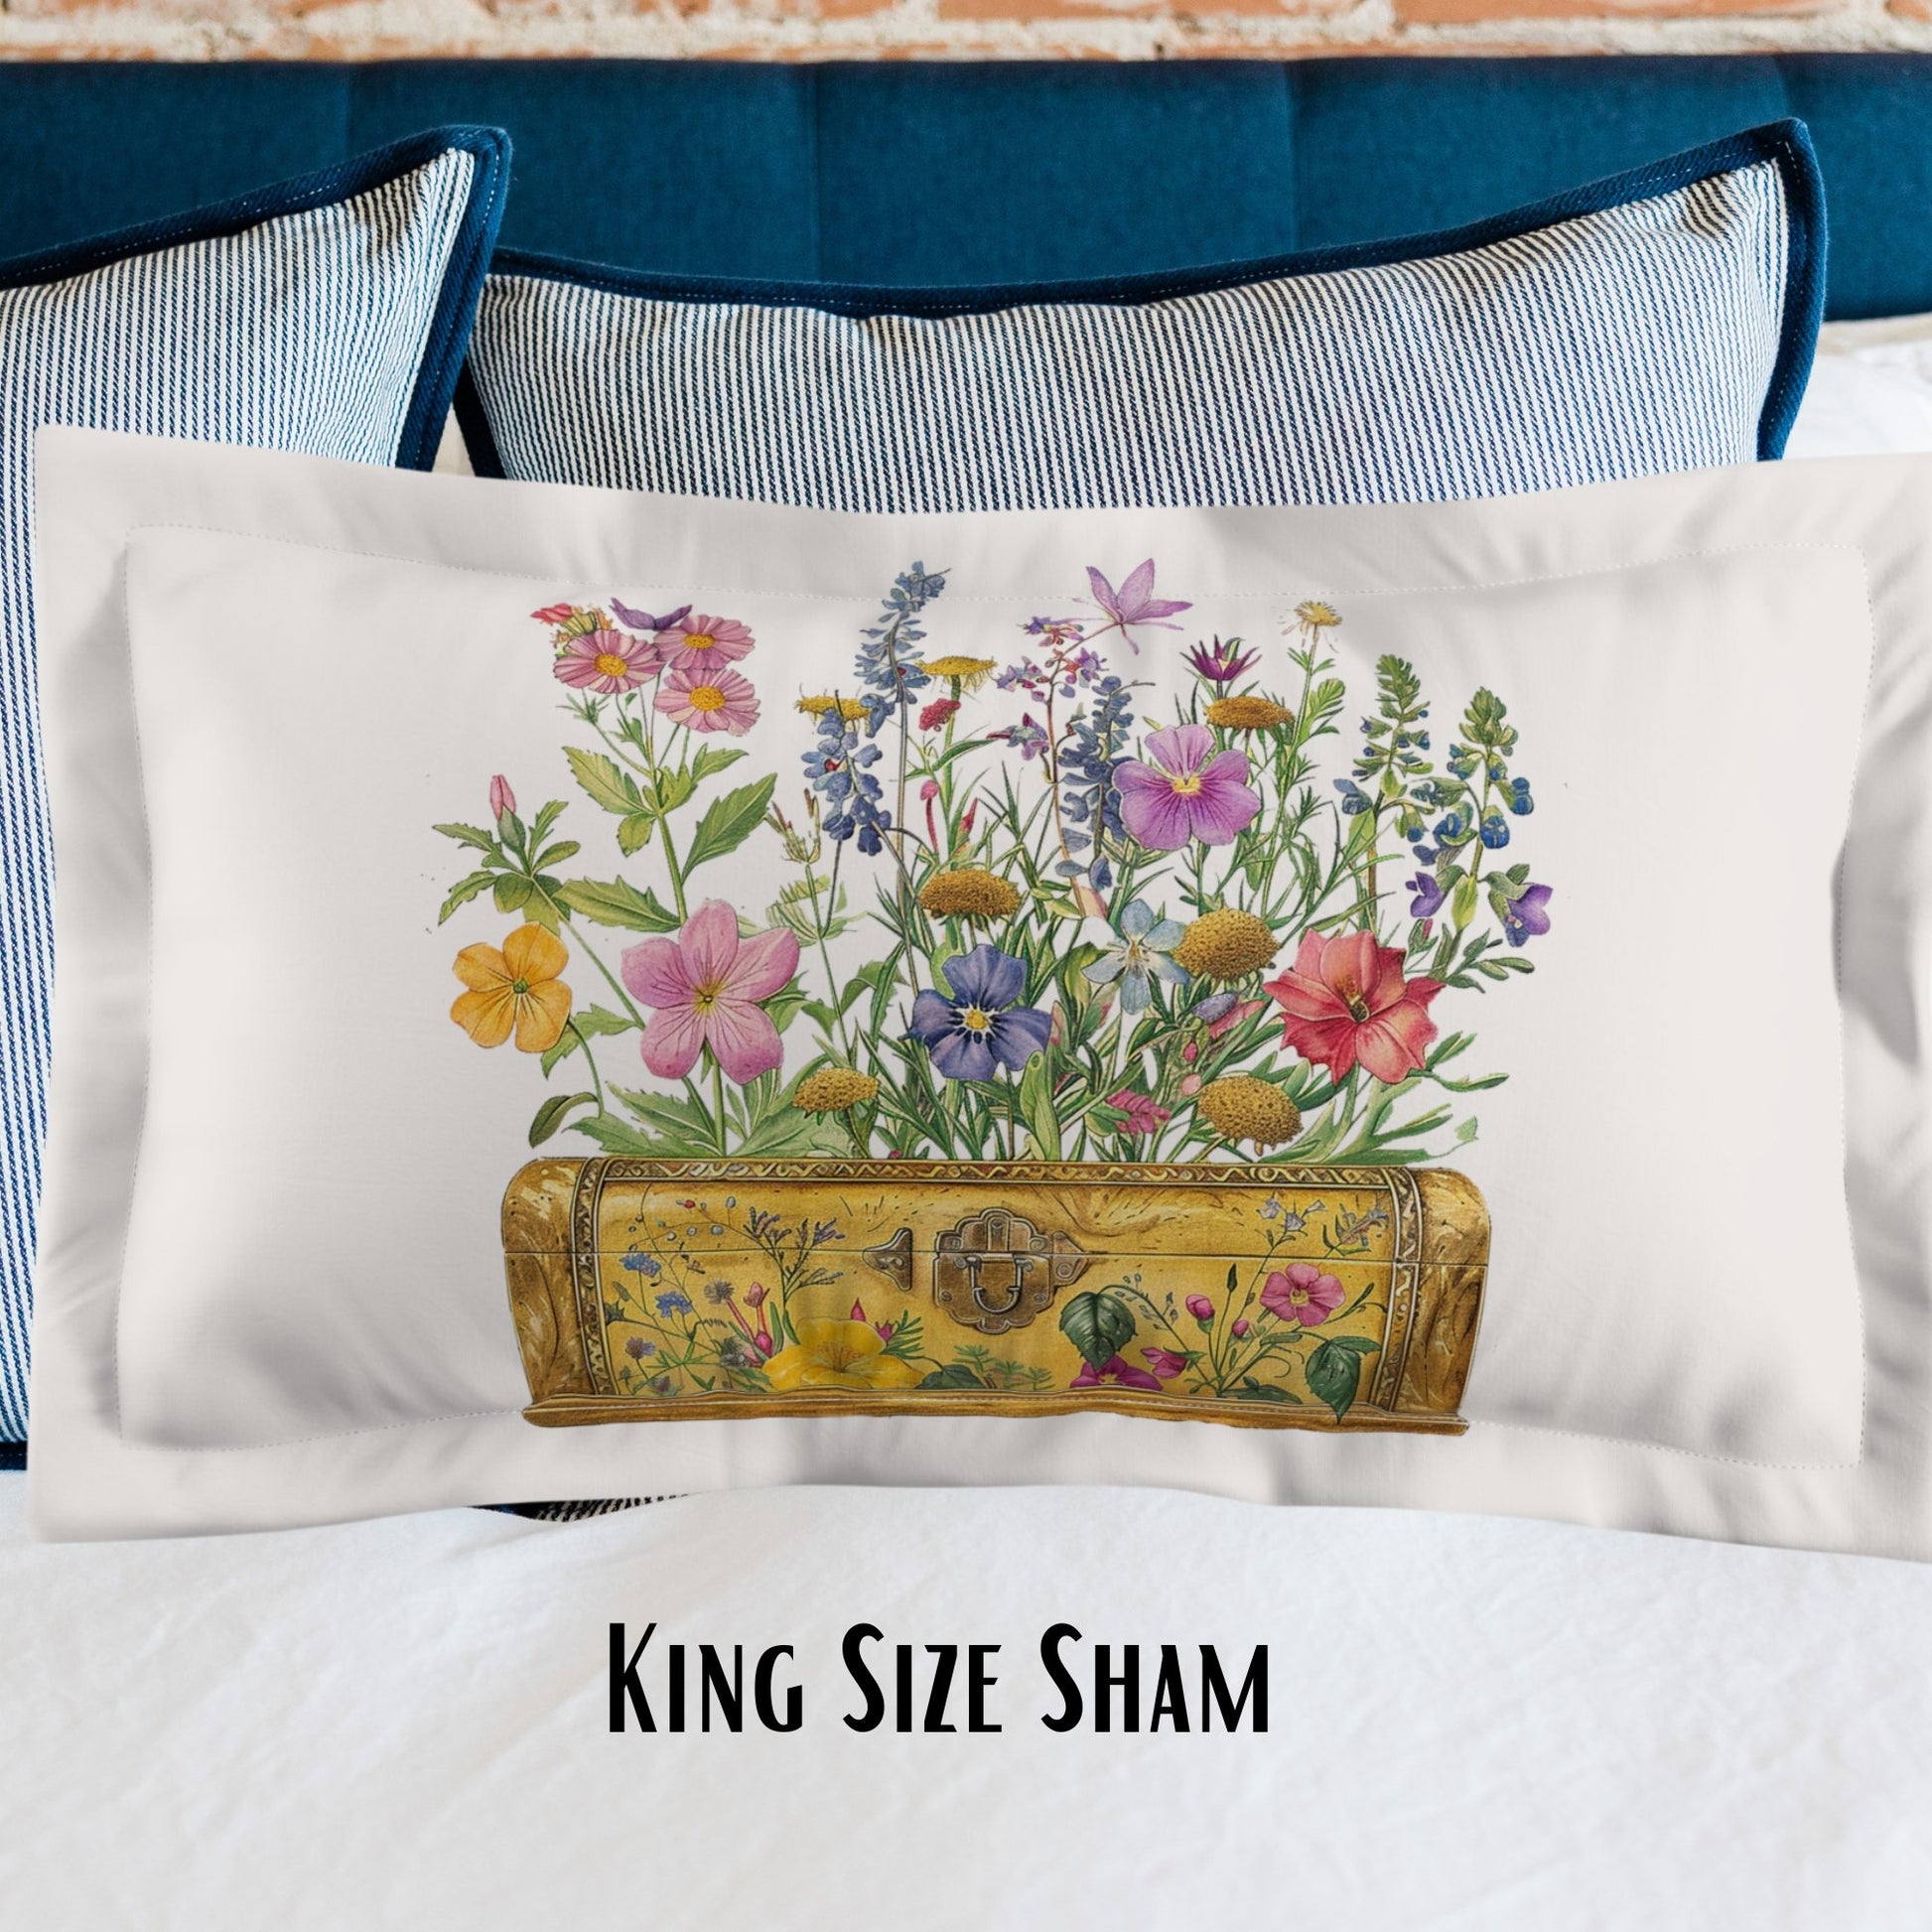 Wildflower Treasure Box Pillow Sham, Watercolor Flower Art Pillow Sham, Colorful Boho Accent - FlooredByArt